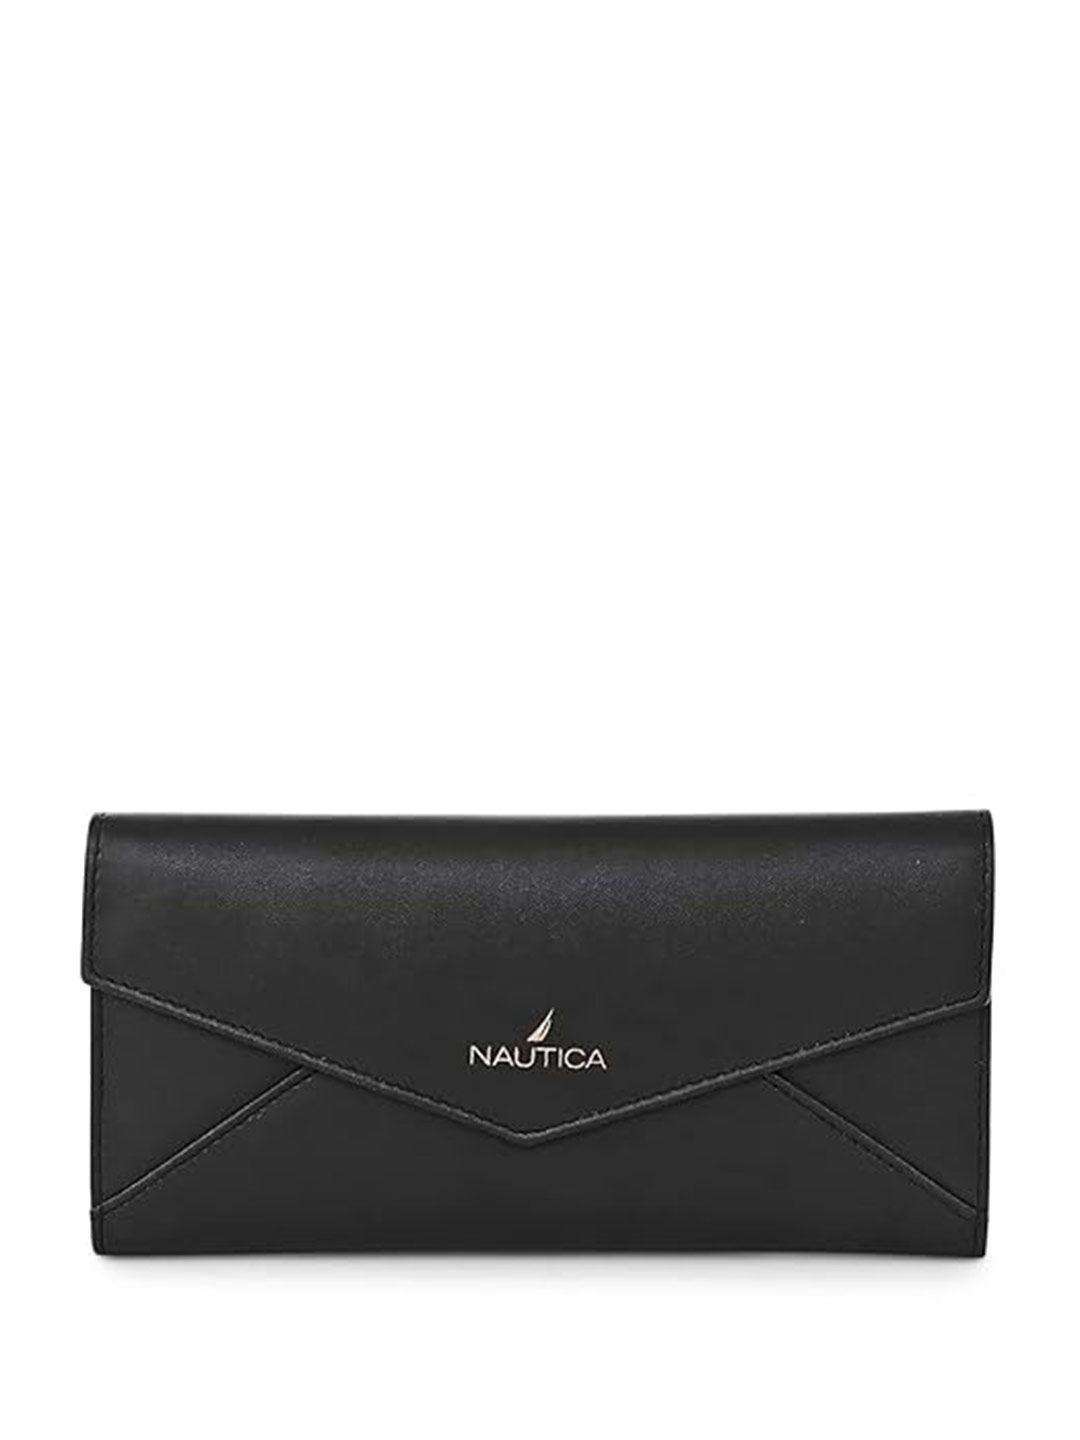 nautica women three fold wallet